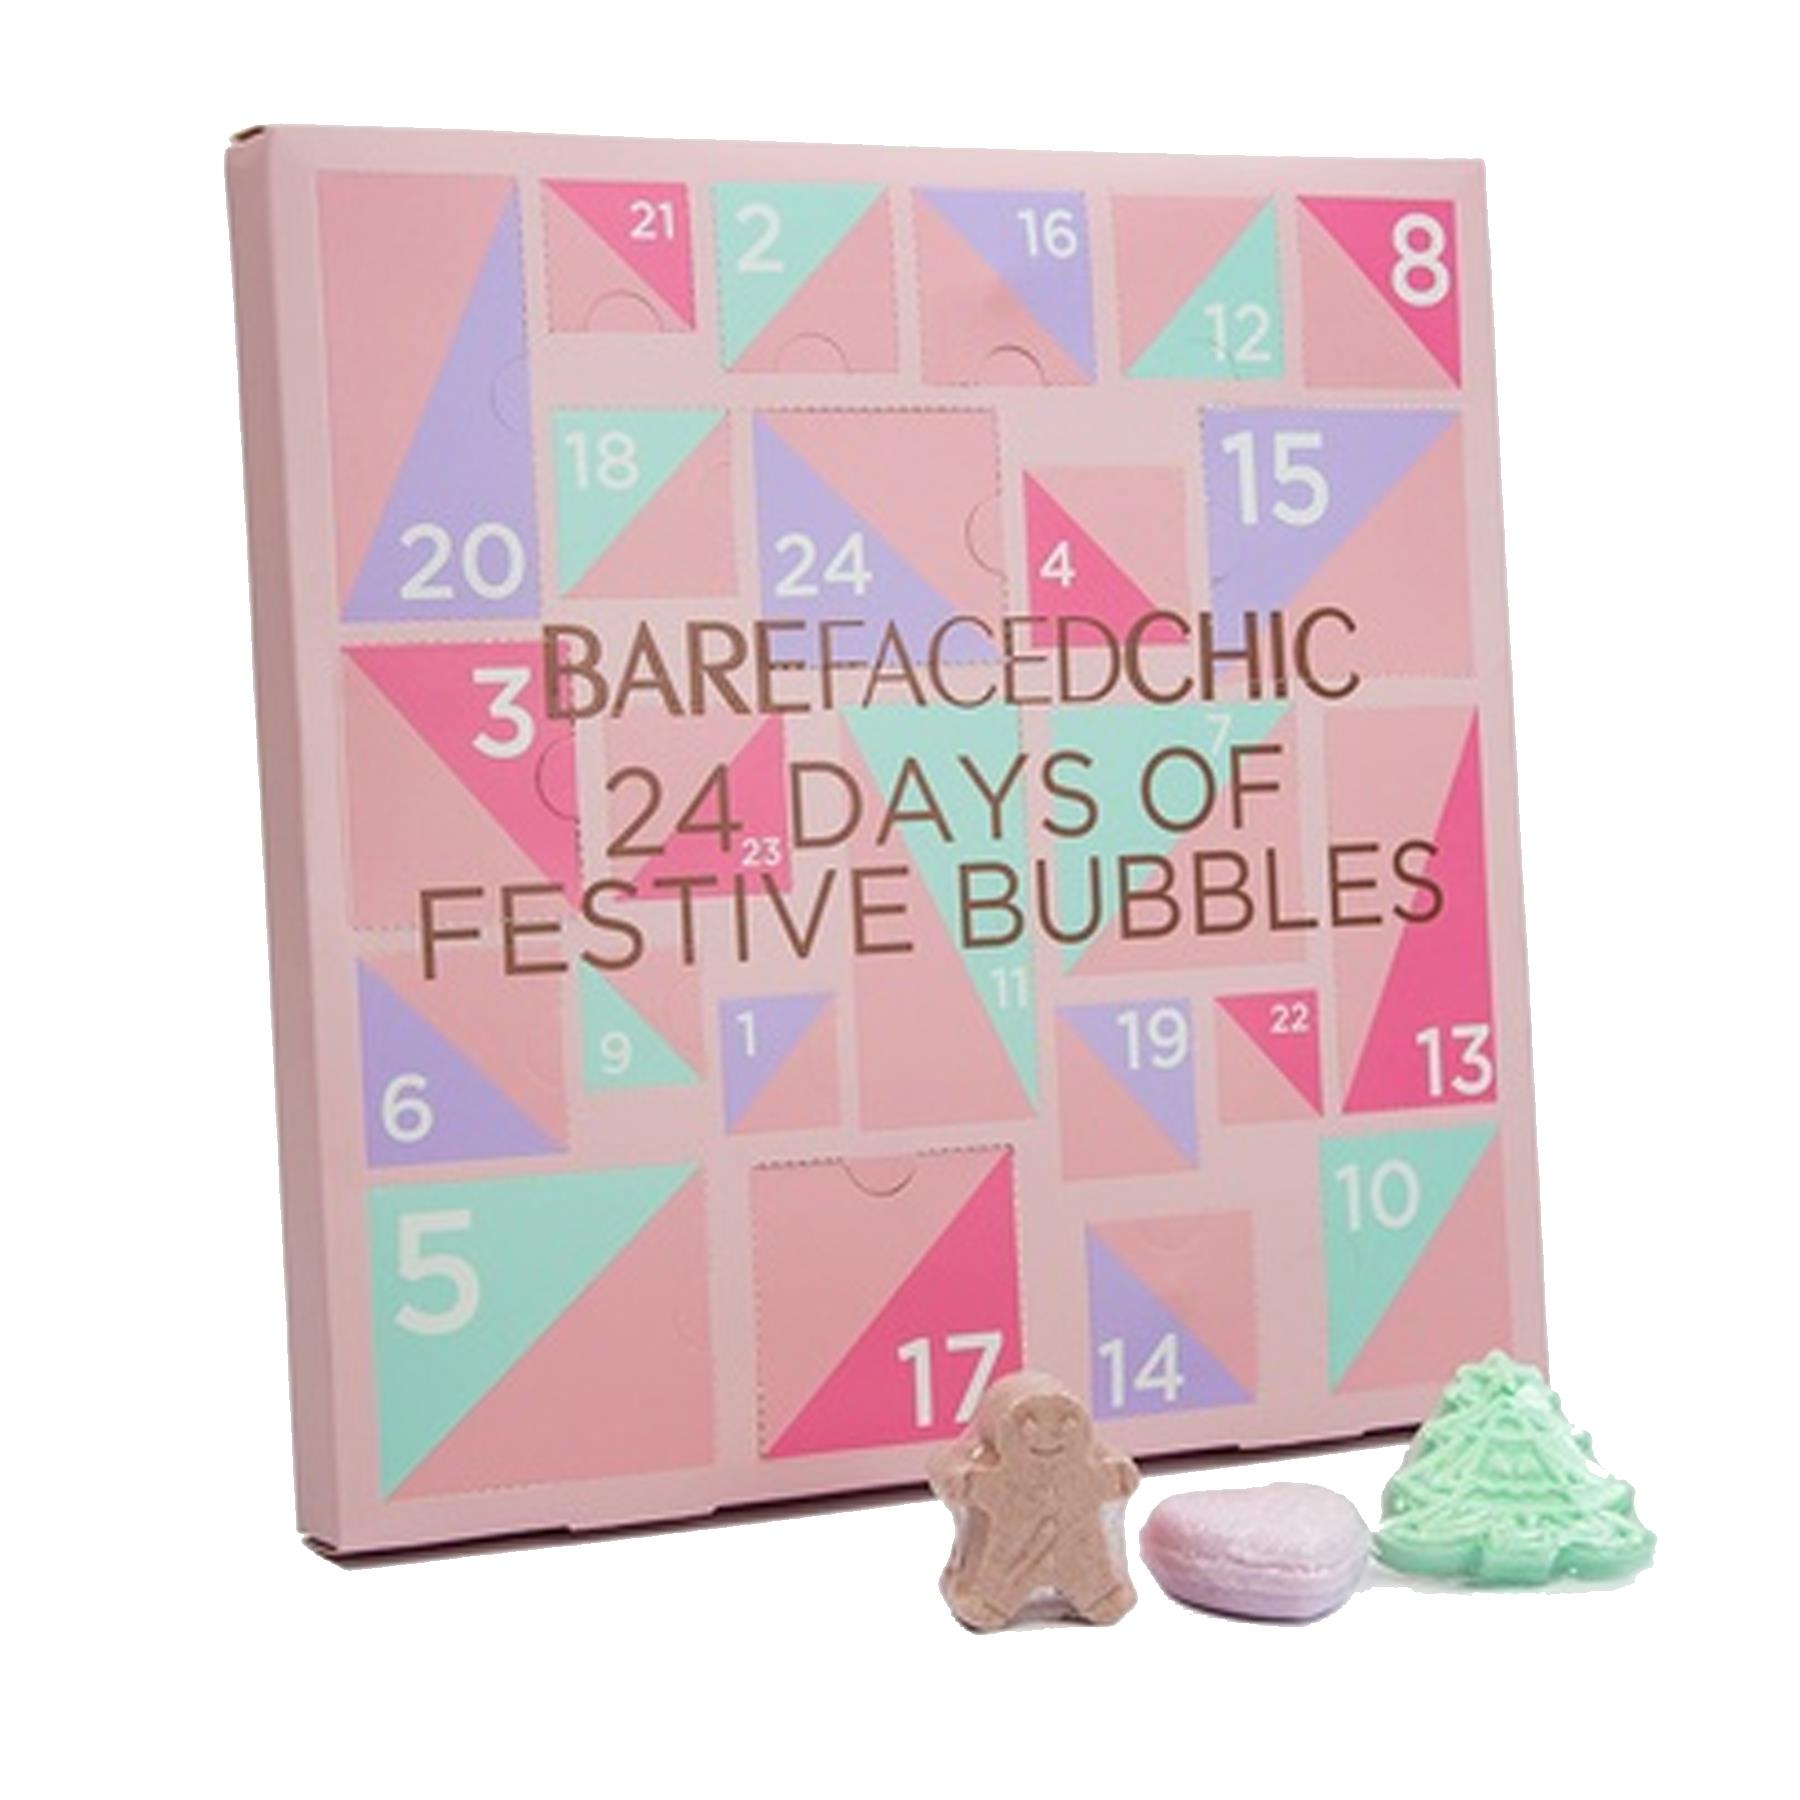 Bare Faced Chic Beauty Christmas Advent Calendar - Festive Bubbles